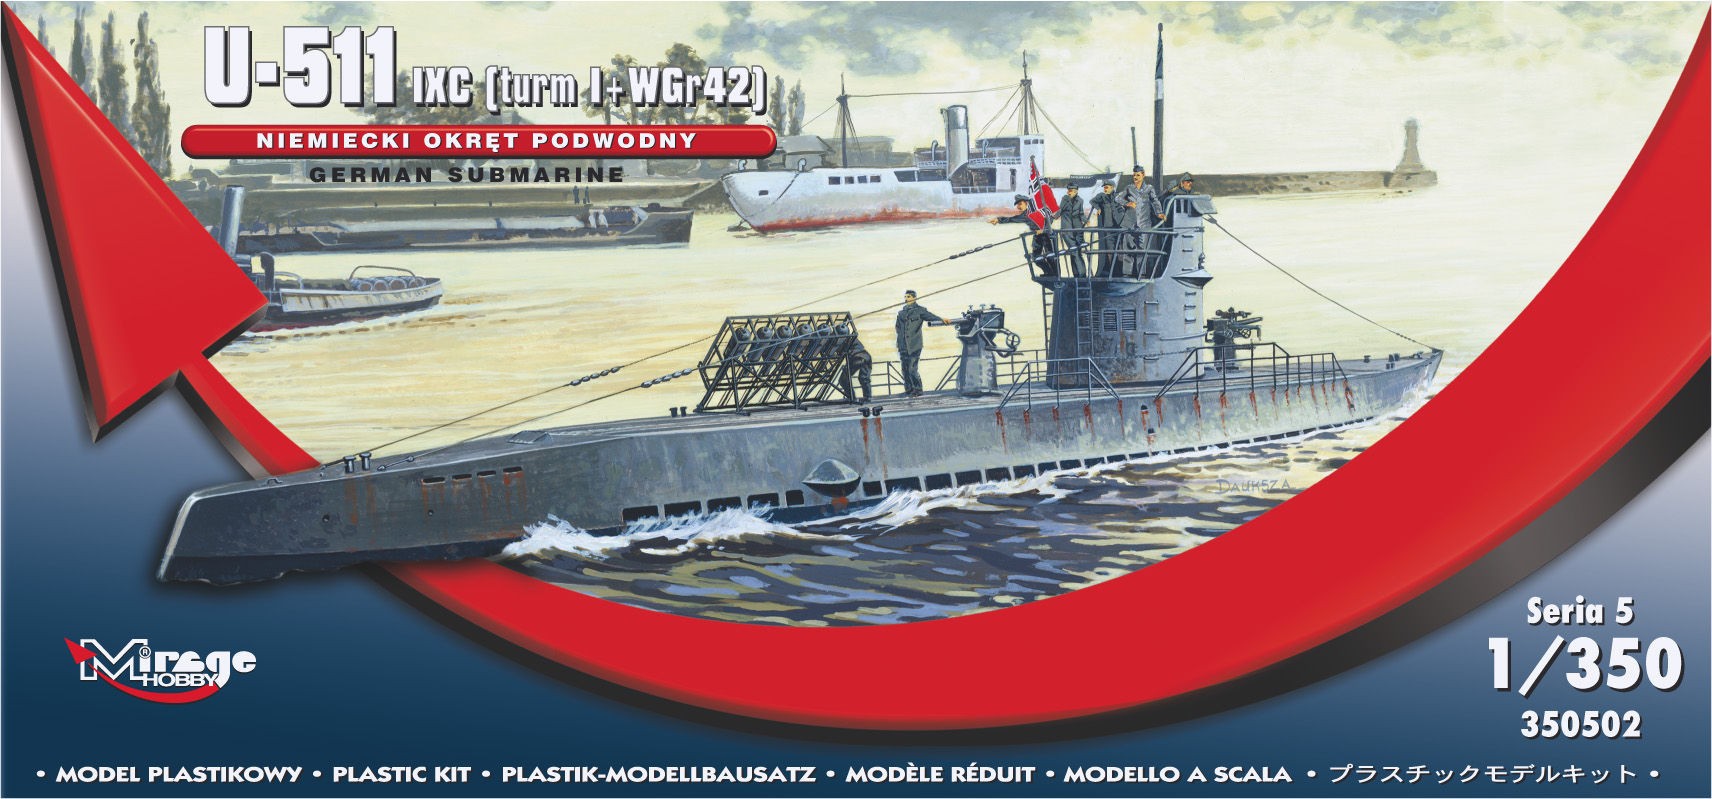 Maquette MIRAGE HOBBY U-Boot allemande U-511 - IX C (turmI + WGr42)- 1